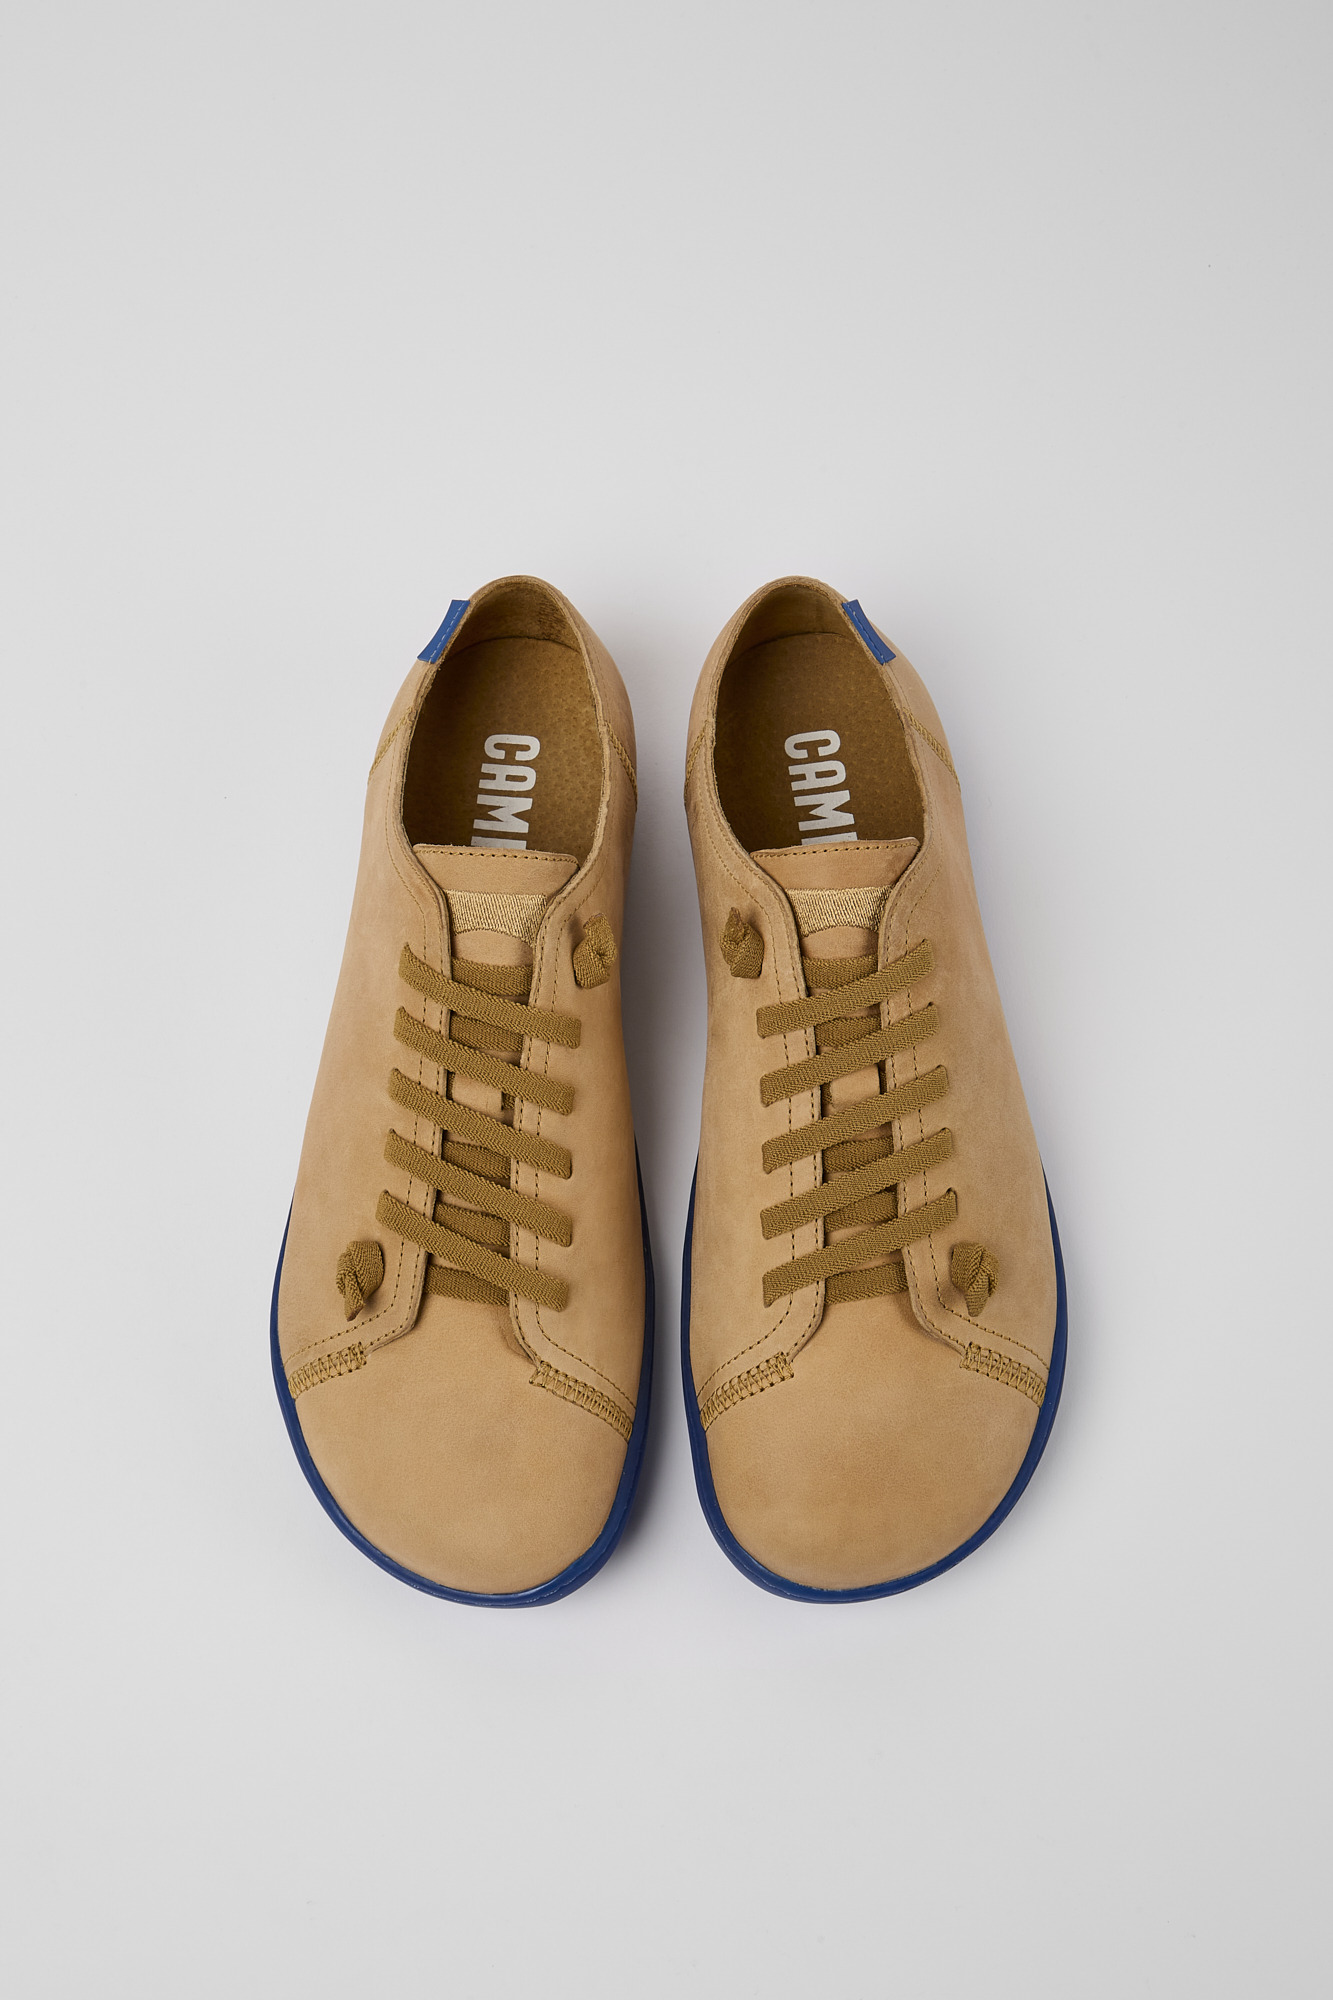 Buy Camper, 17665 Peu Cami Men's Sneaker, dark brown » at MBaetz online